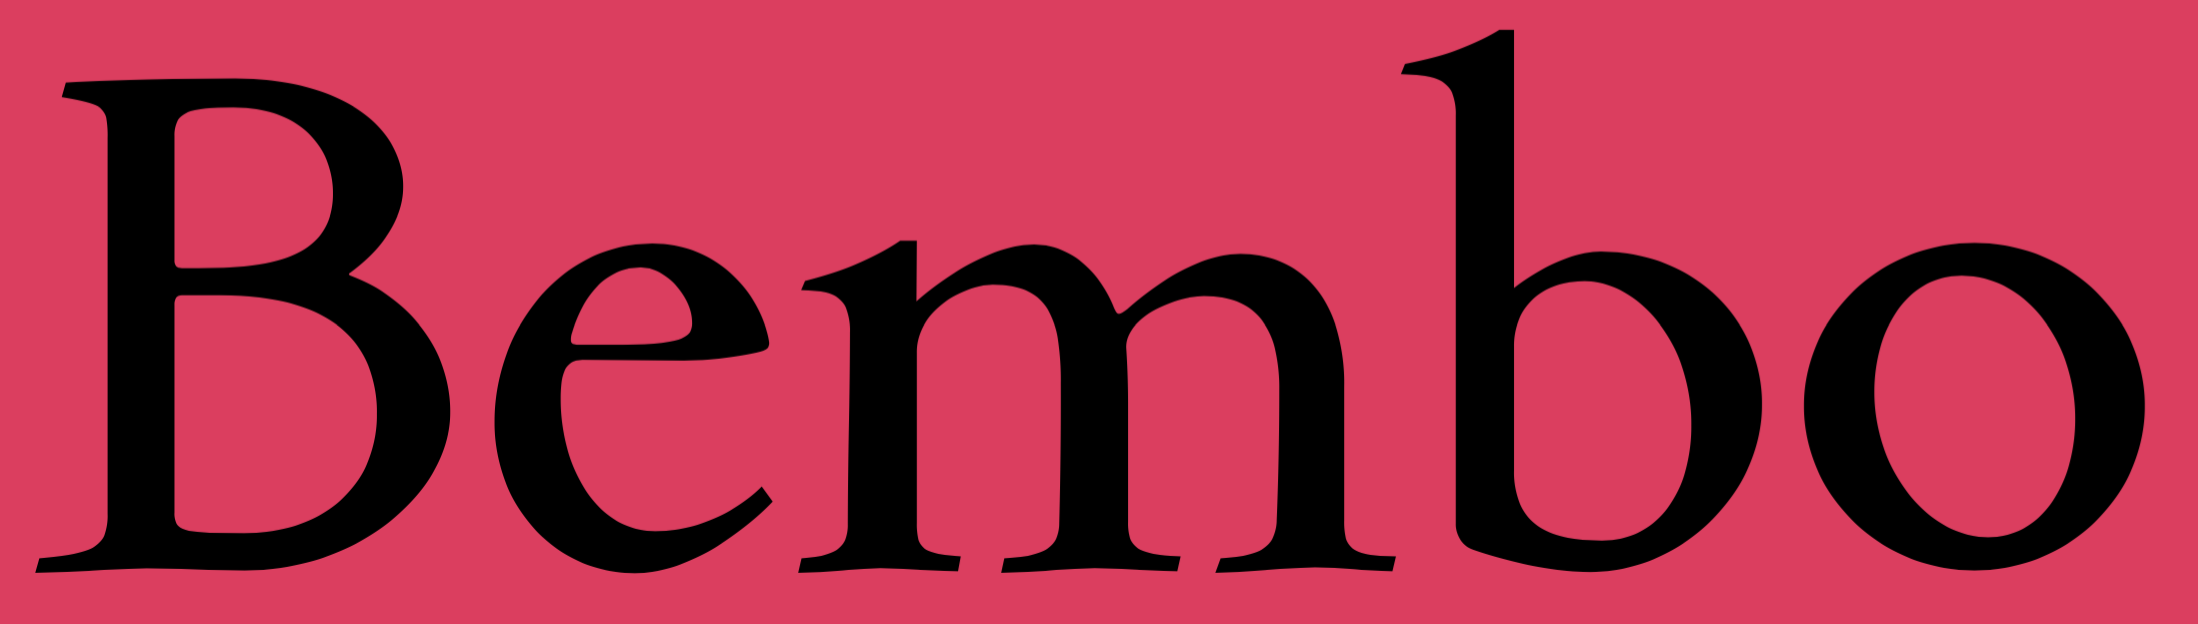 griffo bembo typeface 1495 talic